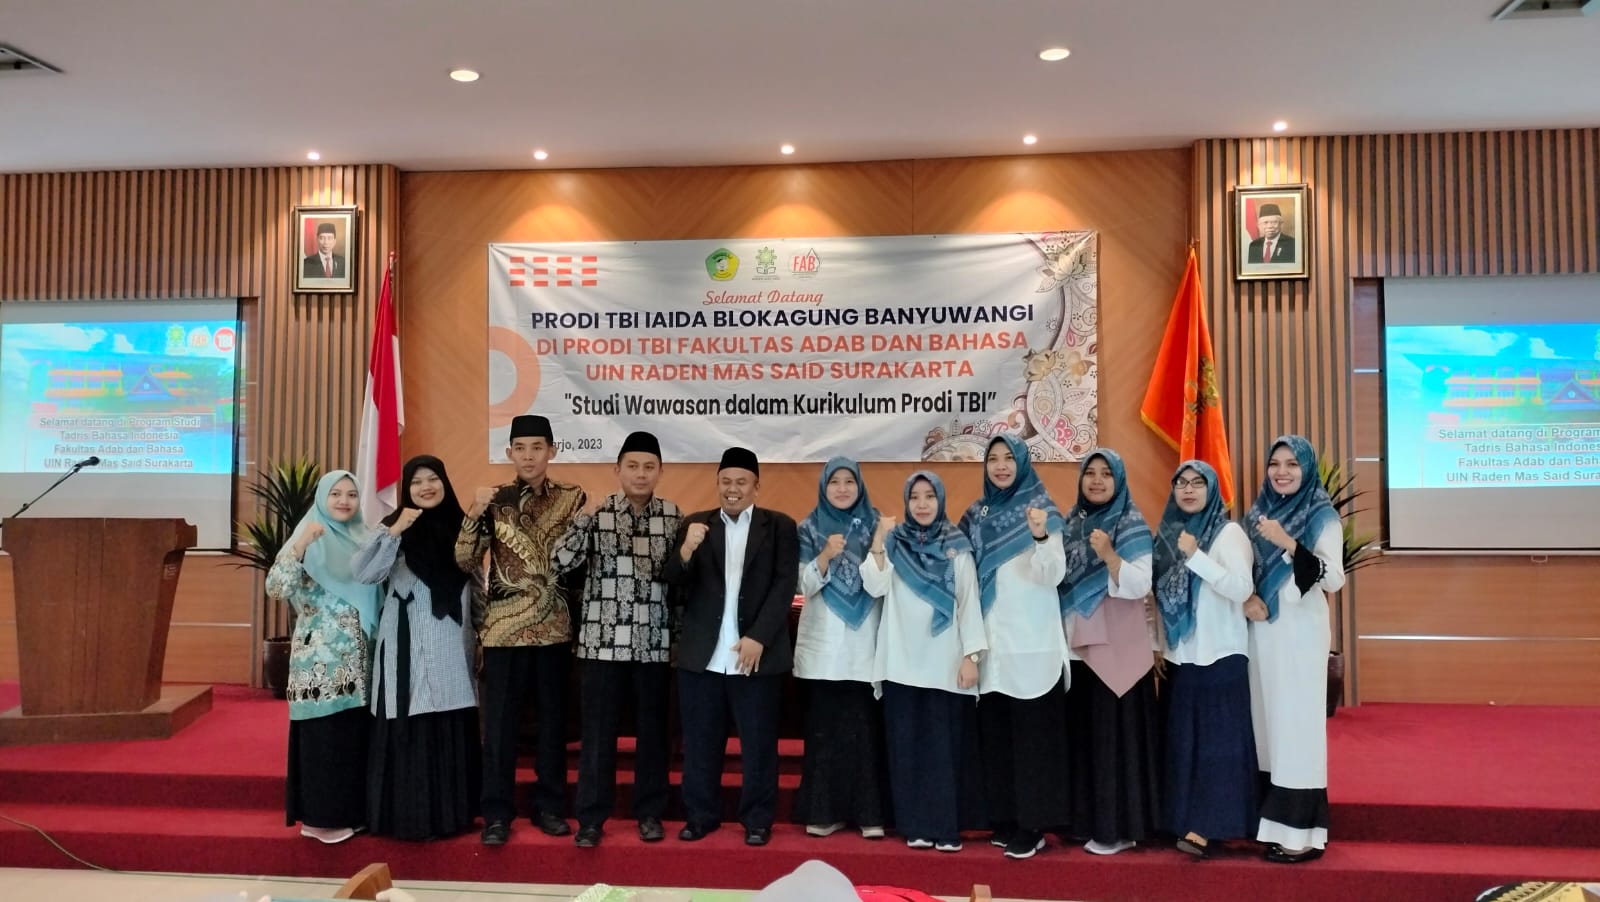 Studi Wawasan Branchmarking di UIN Raden Mas Said Surakarta